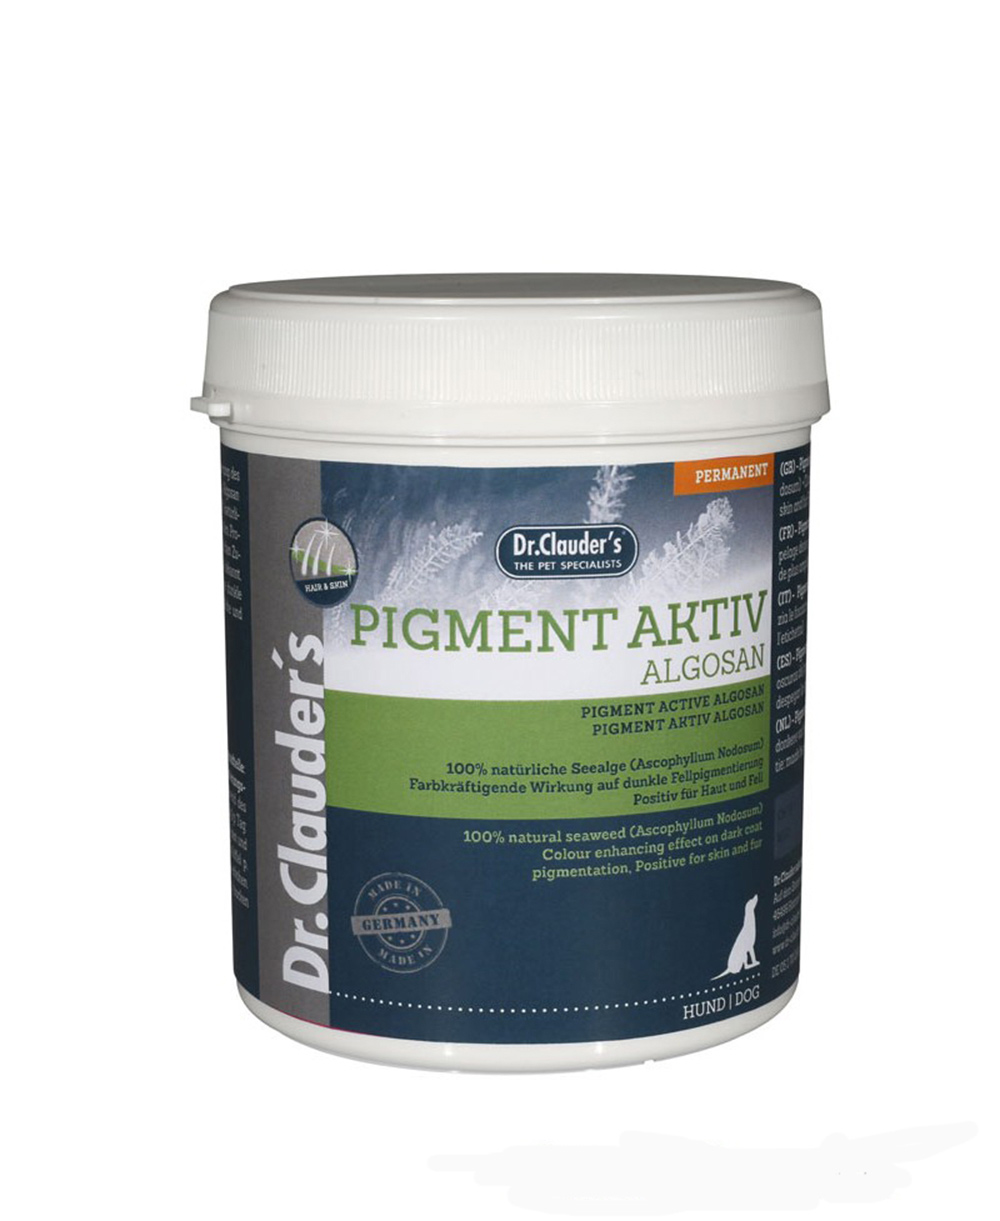 克勞德褐藻粉
DC F&C Pigment Aktiv Algosan (pigment algosan)